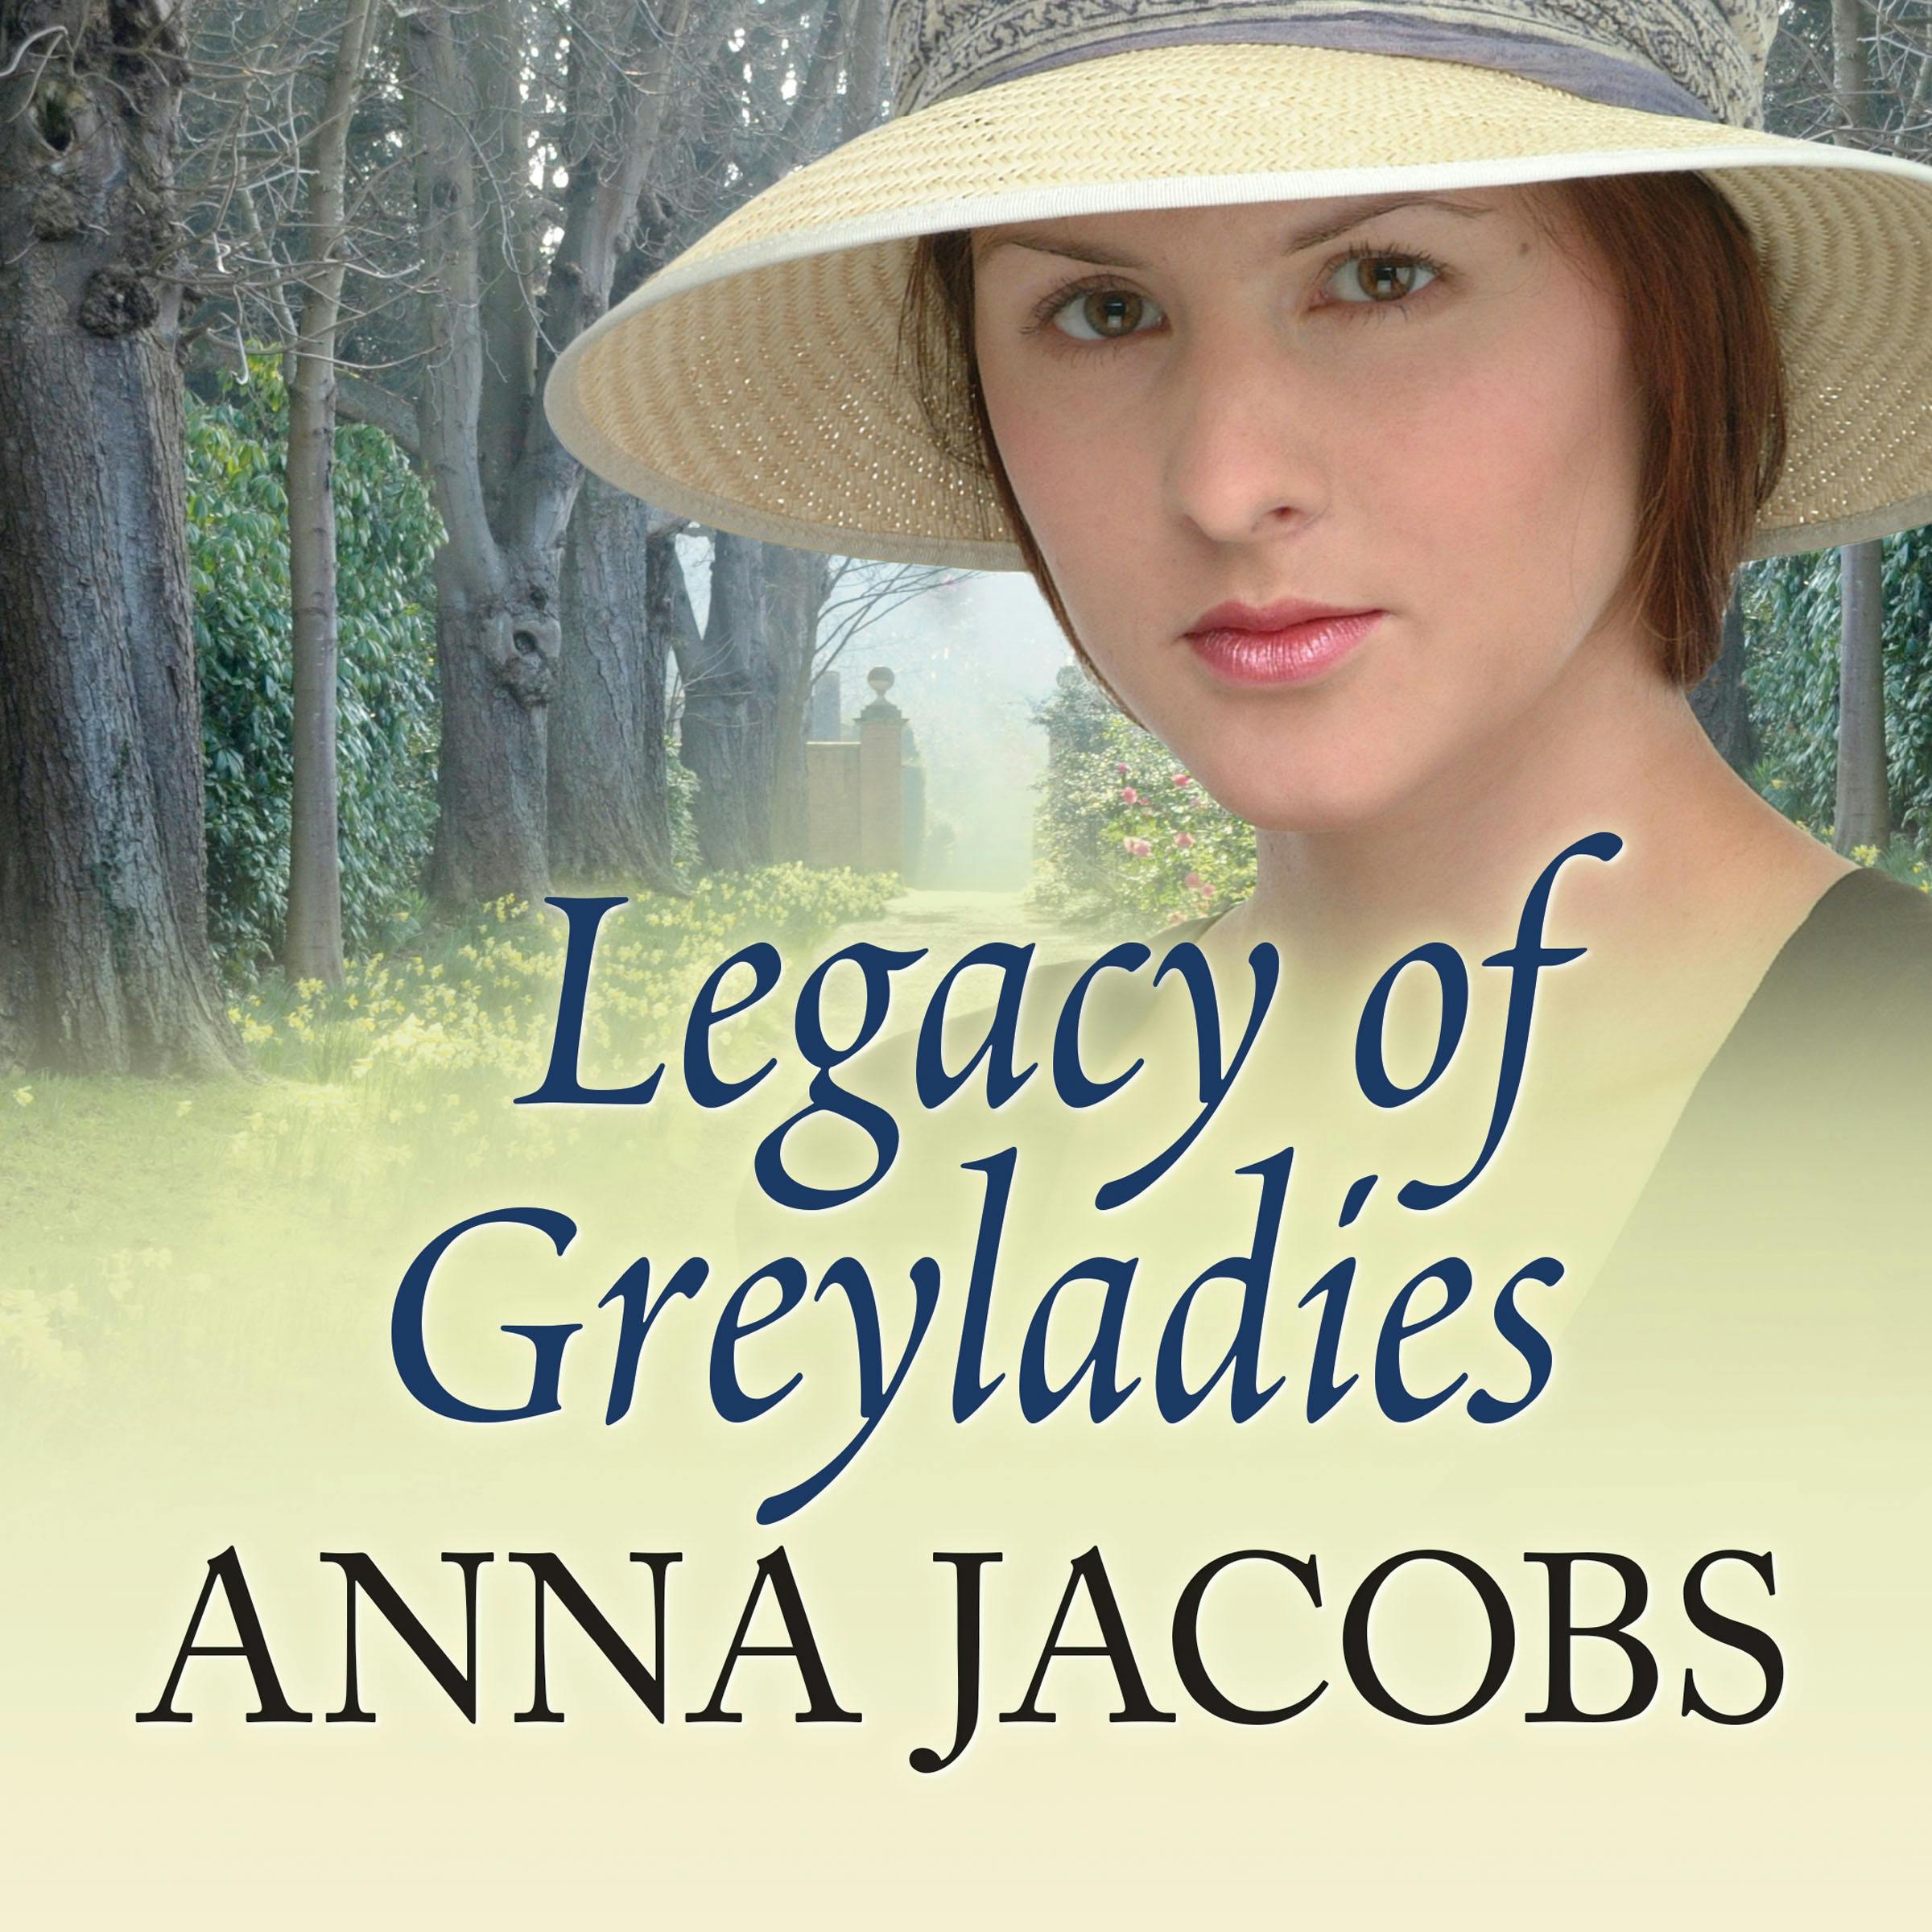 Legacy of Greyladies - Anna Jacobs